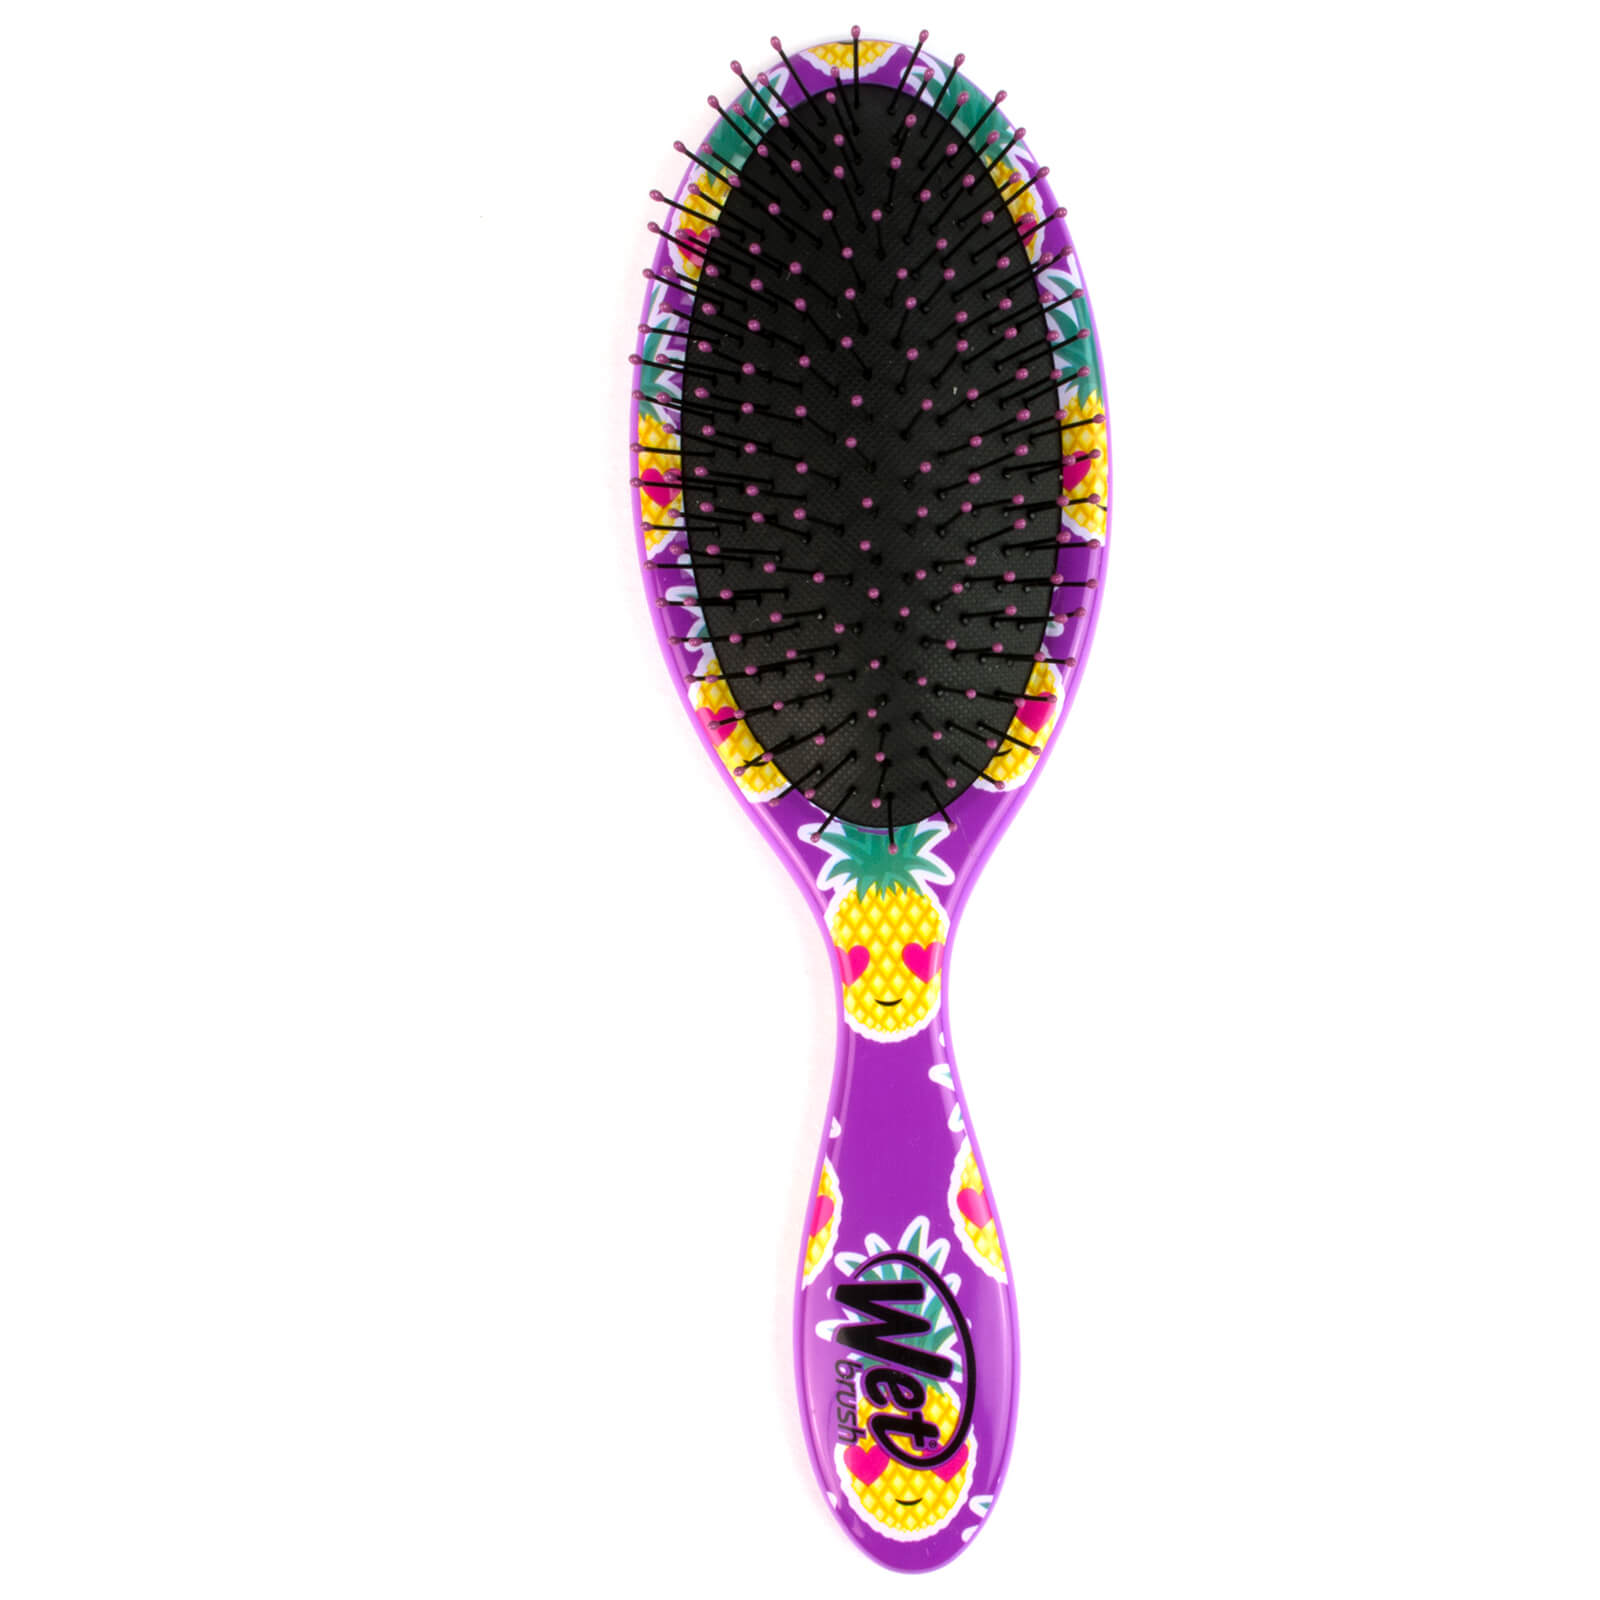 Cepillo para el cabello Original Smiley de WetBrush - Pineapple